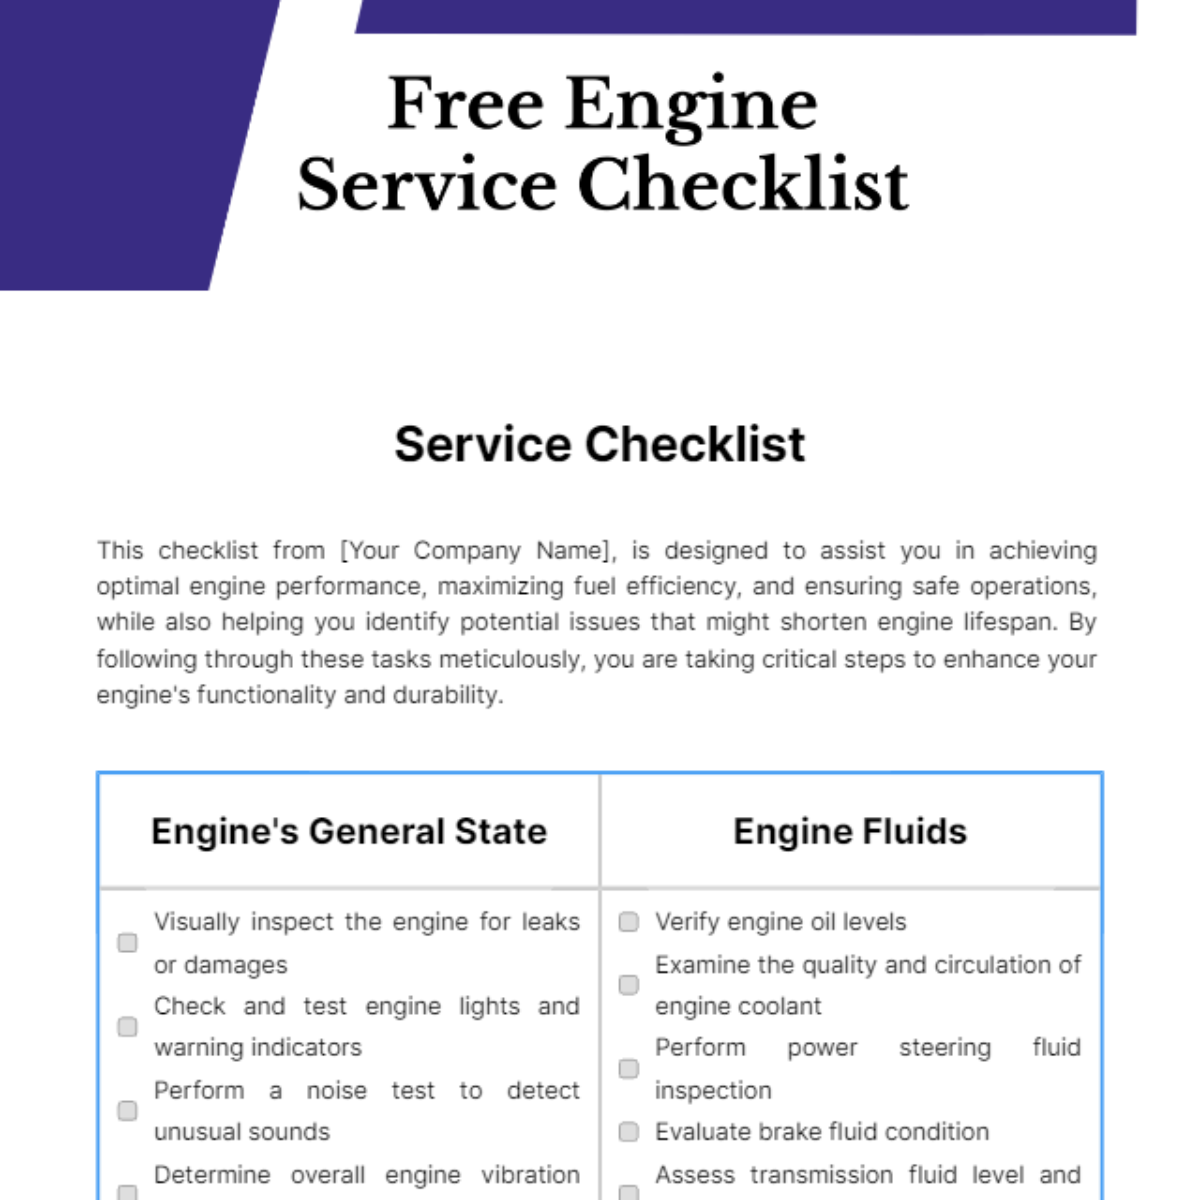 Free Engine Service Checklist Template